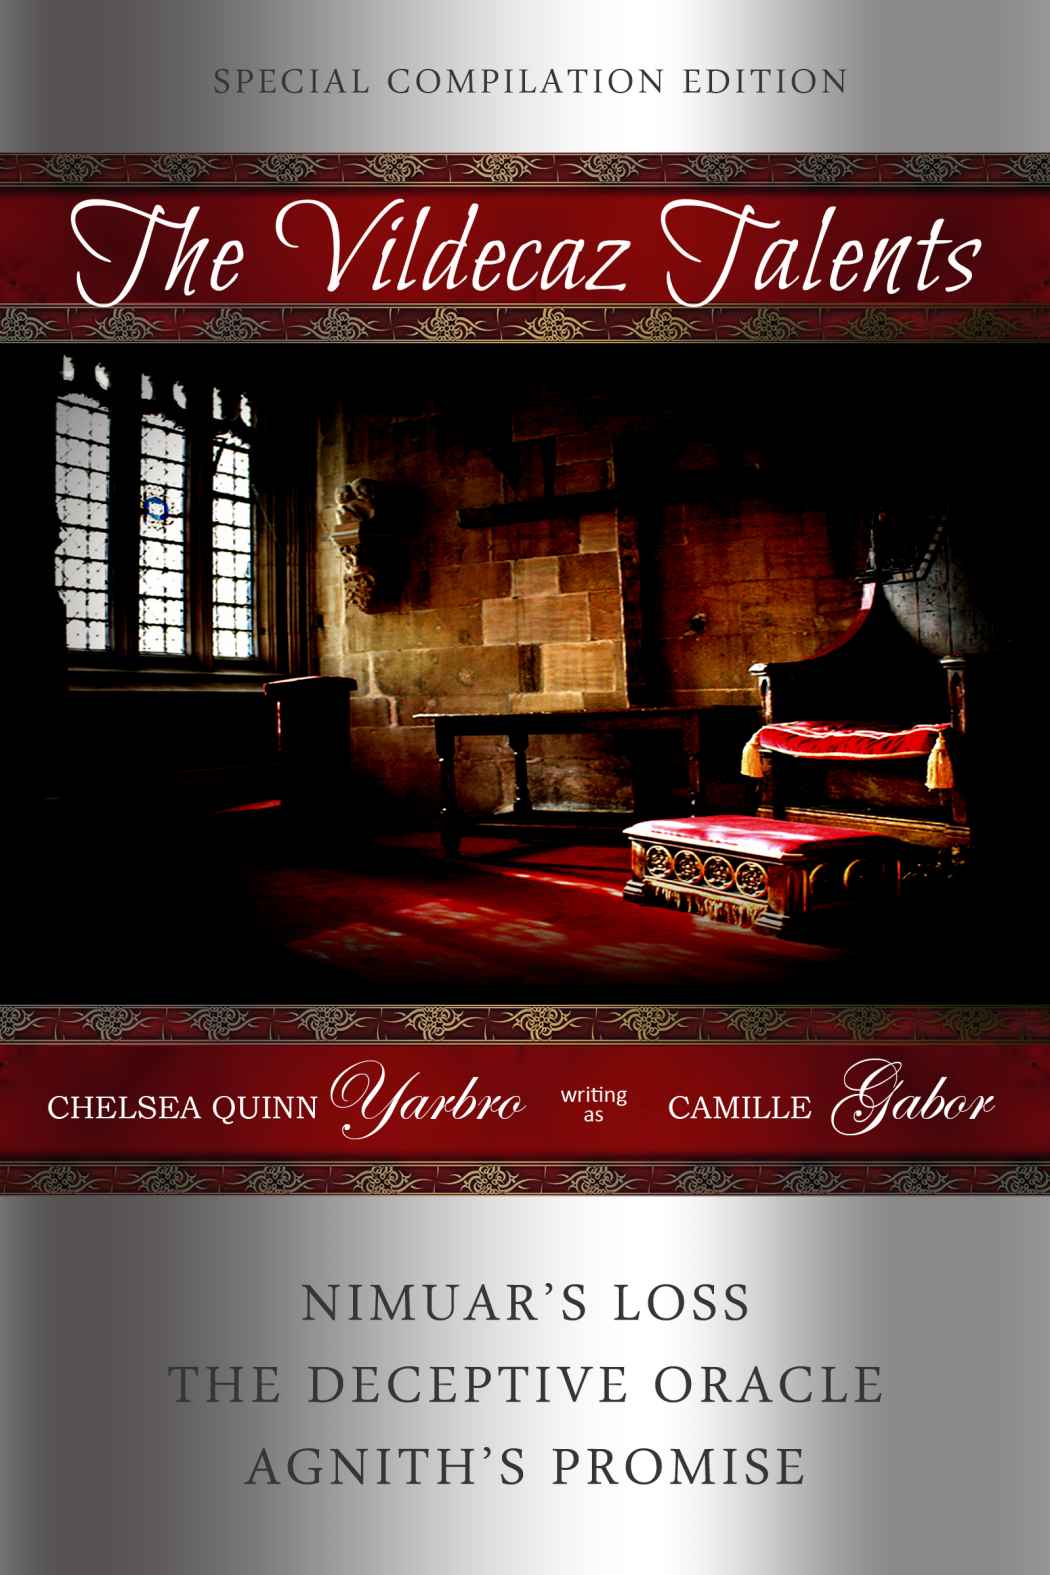 The Vildecaz Talents: The complete set of Vildecaz Stories including Nimuar's Loss, The Deceptive Oracle and Agnith's Promise